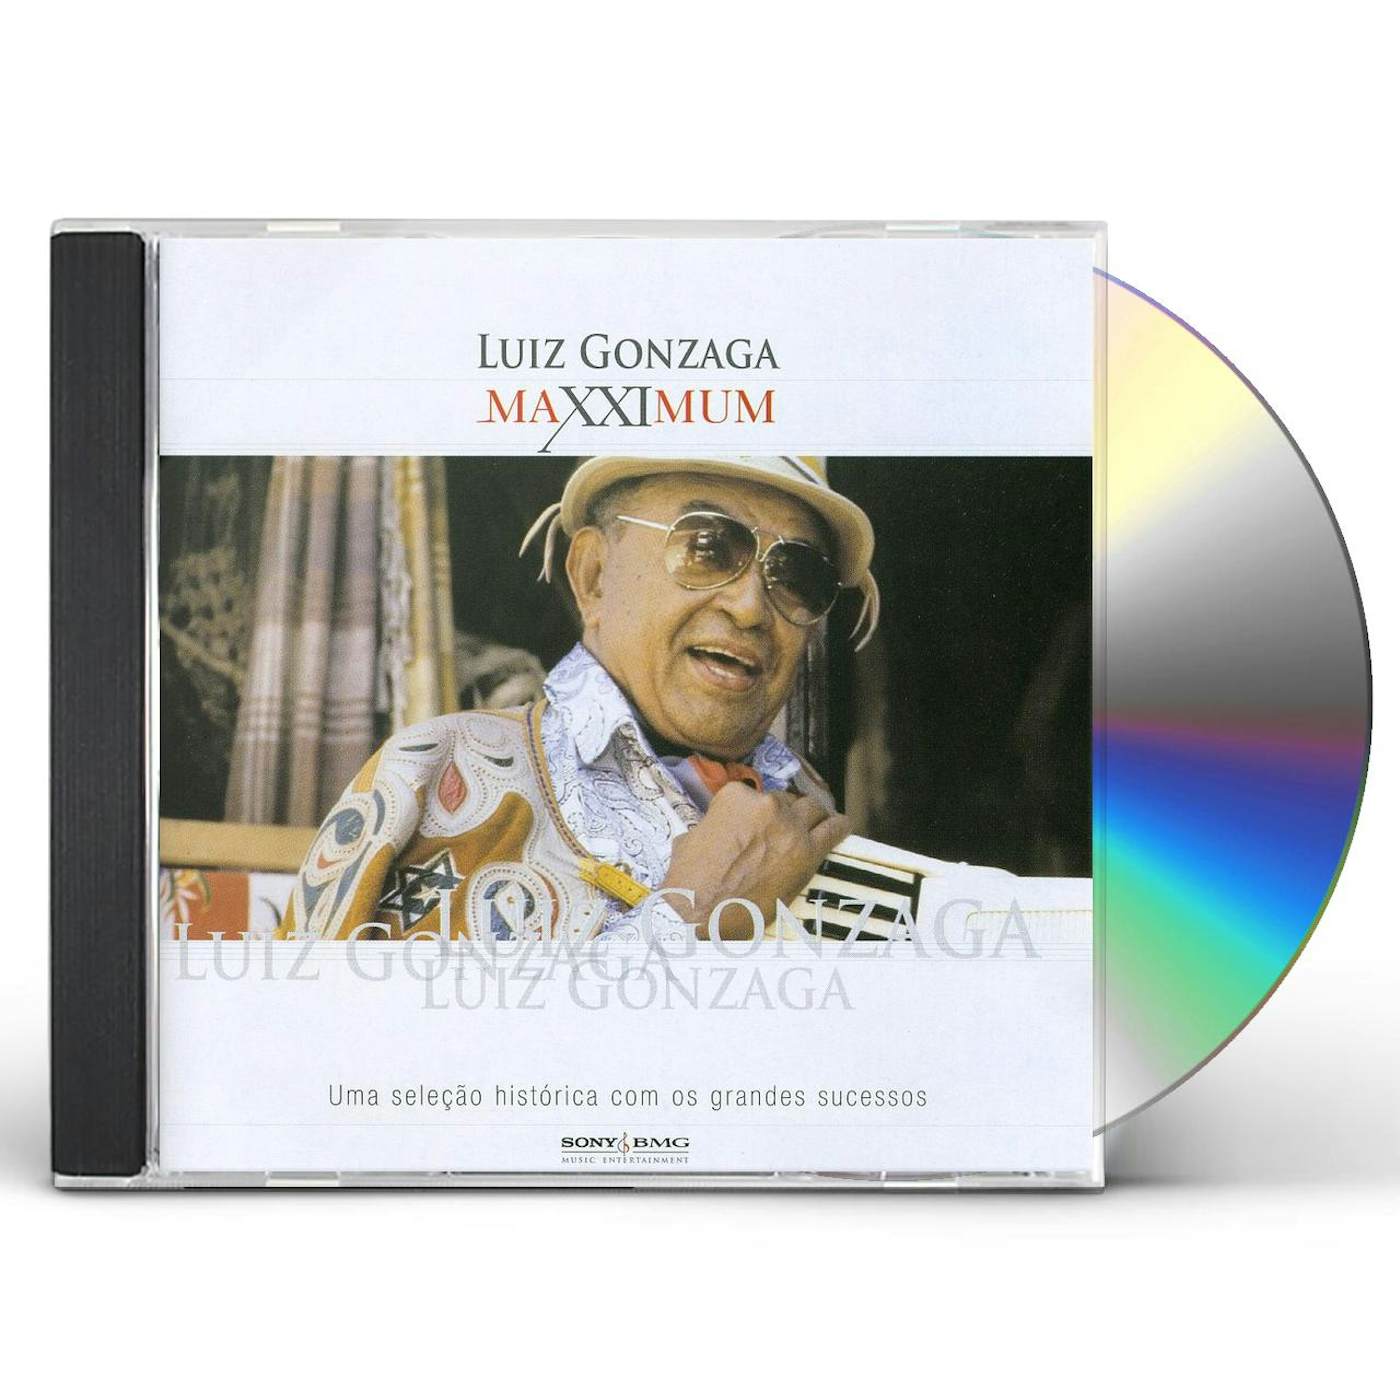 Luiz Gonzaga MAXXIMUM CD